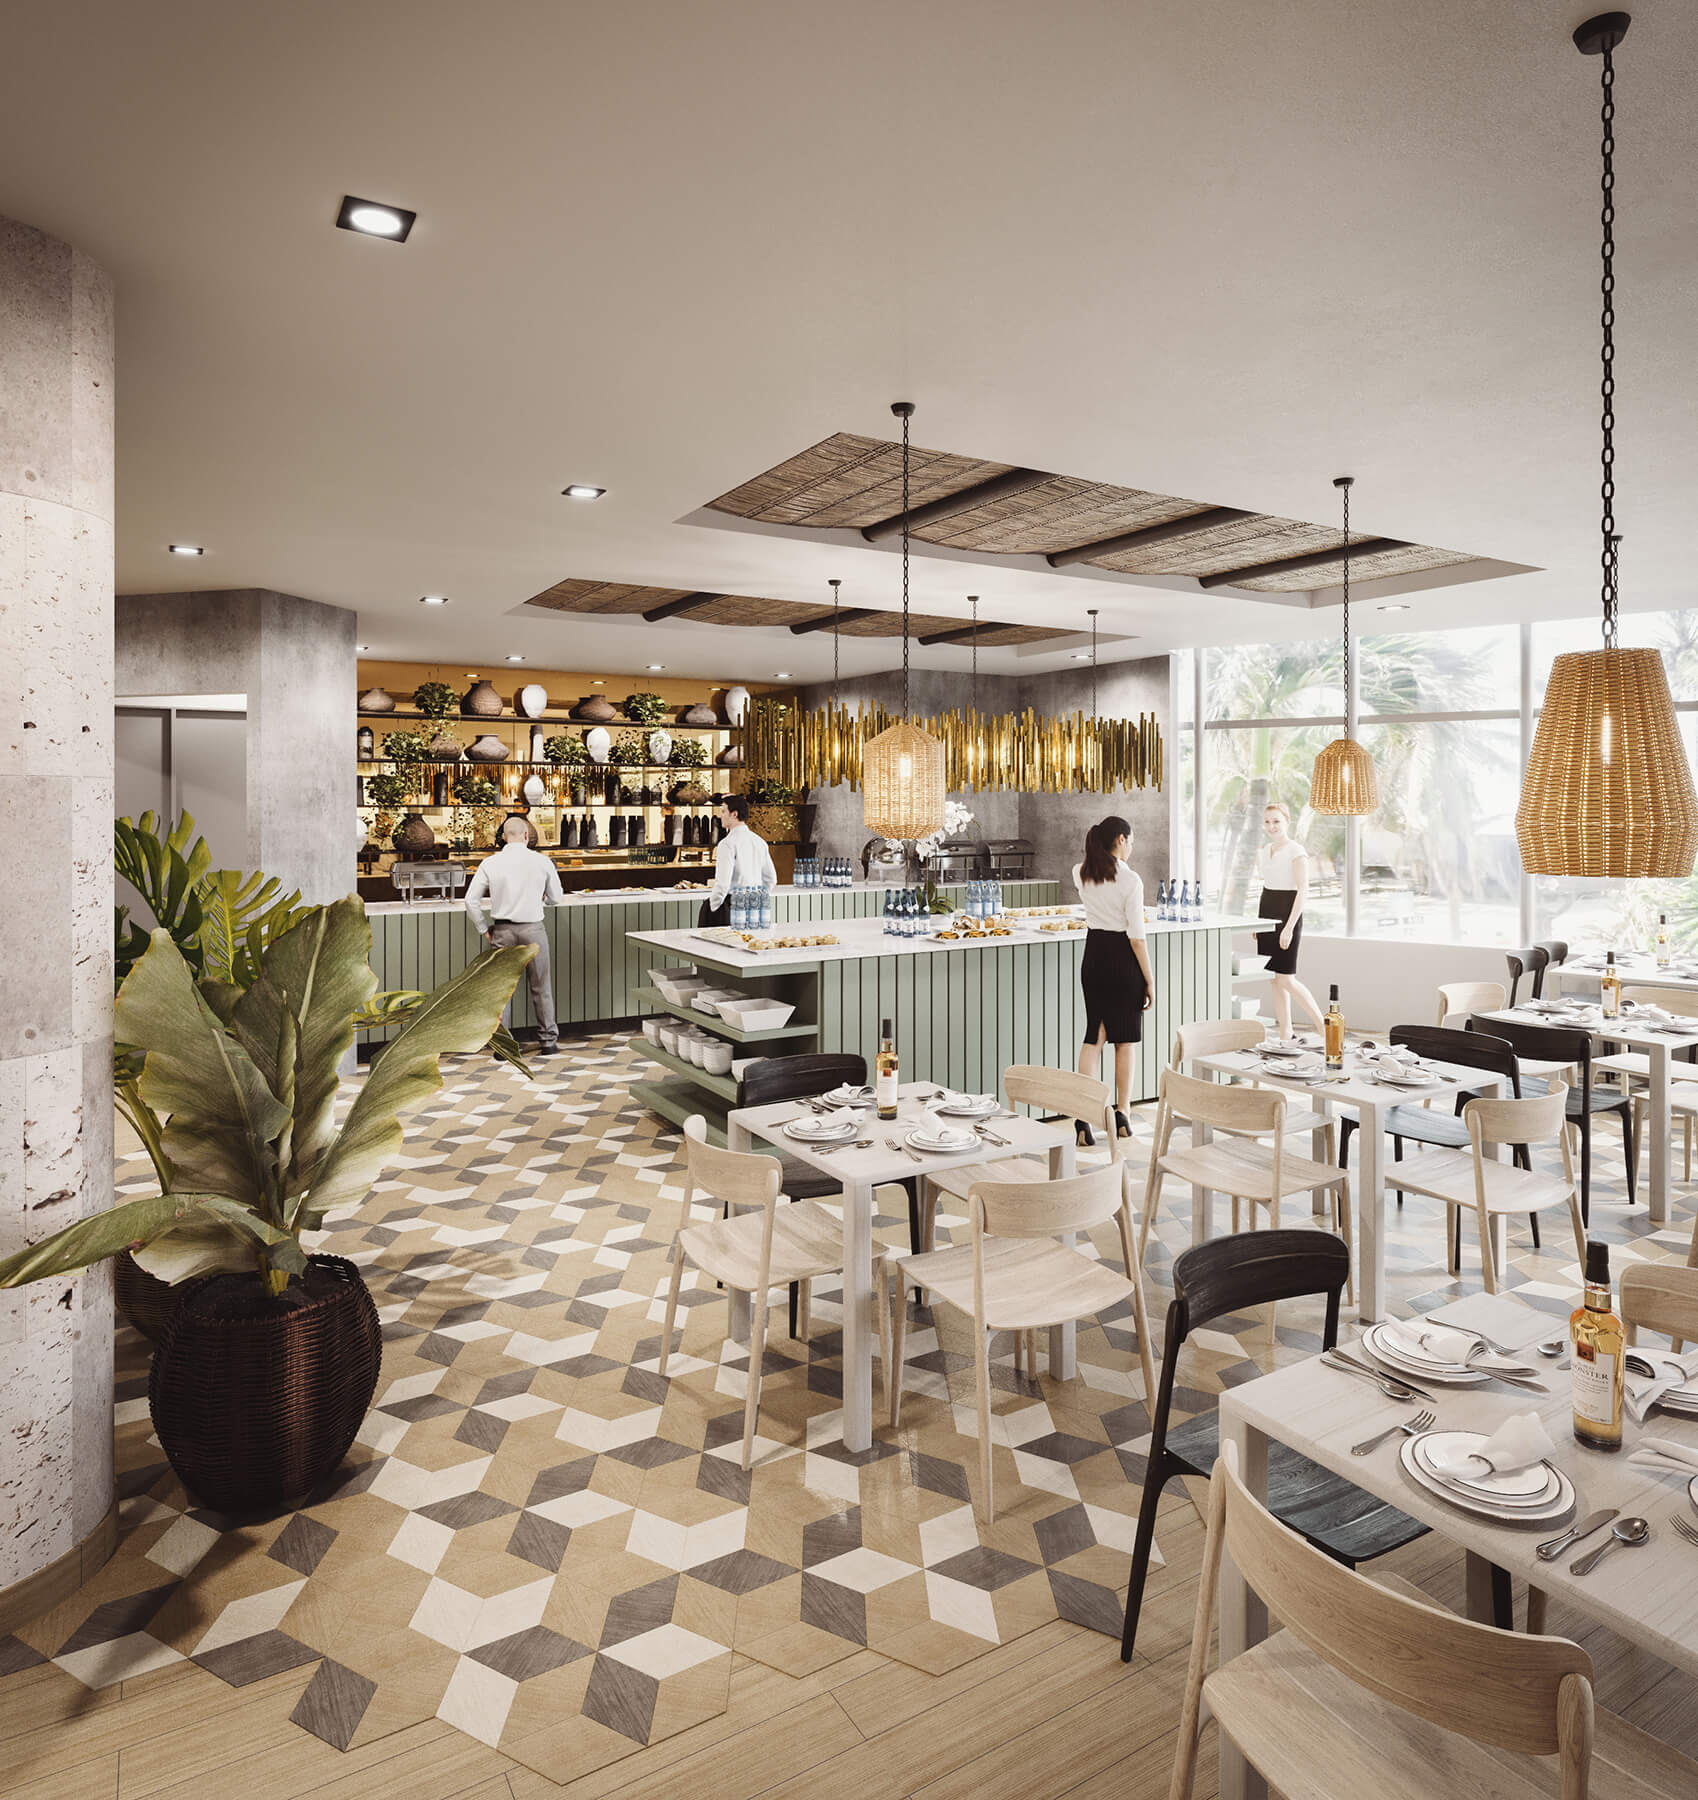 Restaurant interior by Daniel Diaz Del Castillo | Kstudio - 3ds Max Plugins